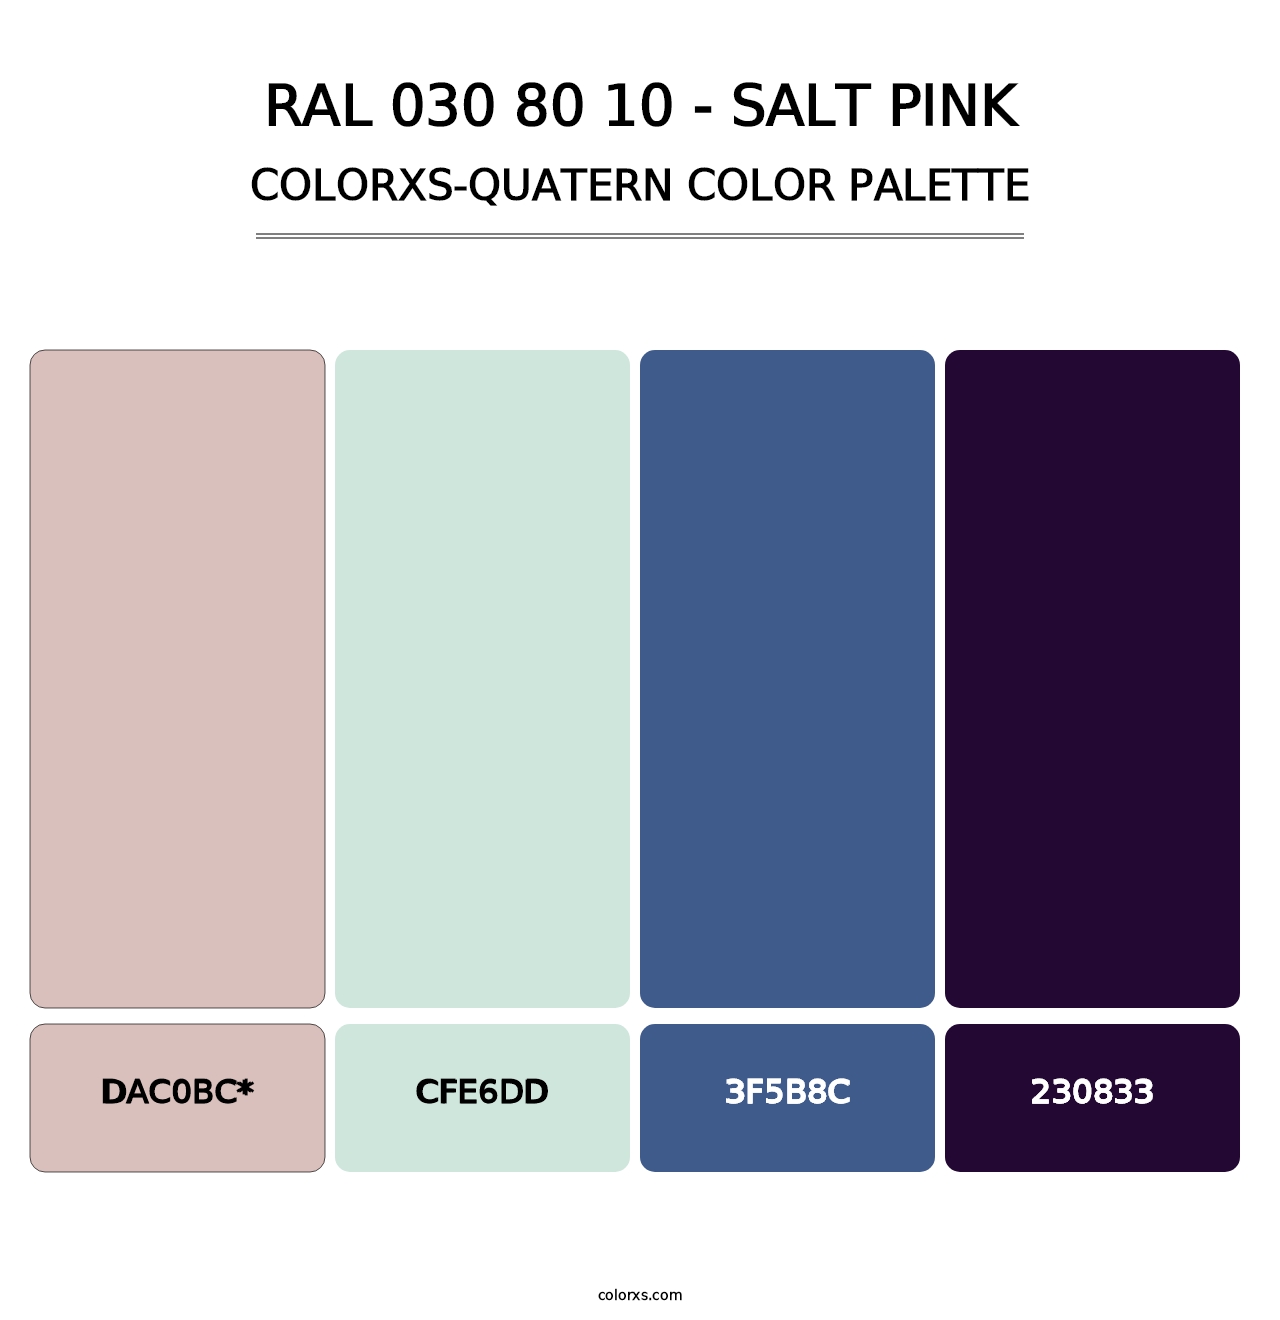 RAL 030 80 10 - Salt Pink - Colorxs Quatern Palette